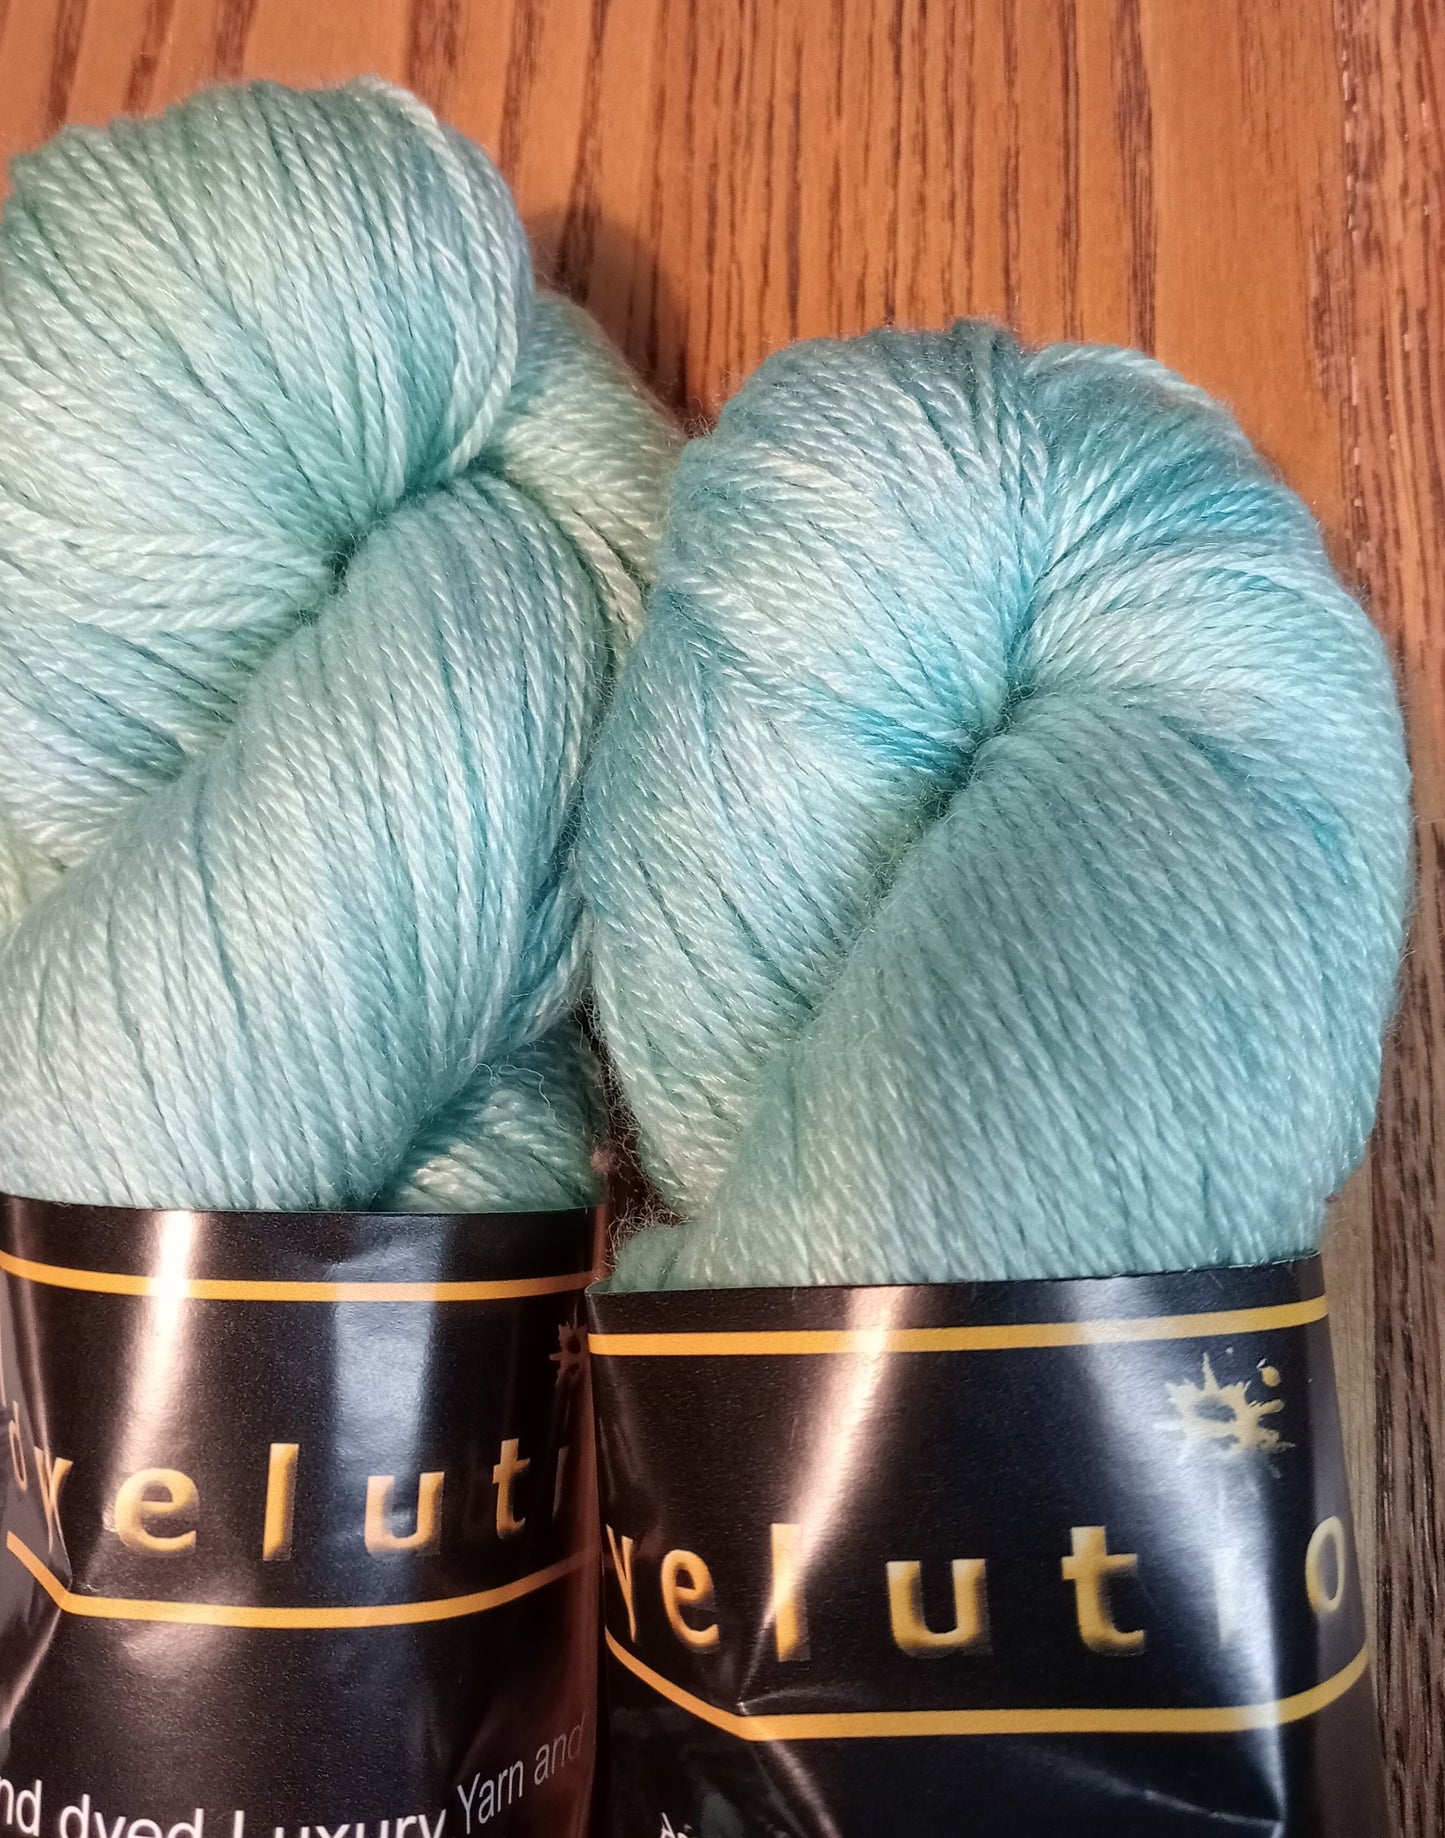 100G Merino/Tencel hand dyed luxury Yarn 4 Ply- "Celadon"